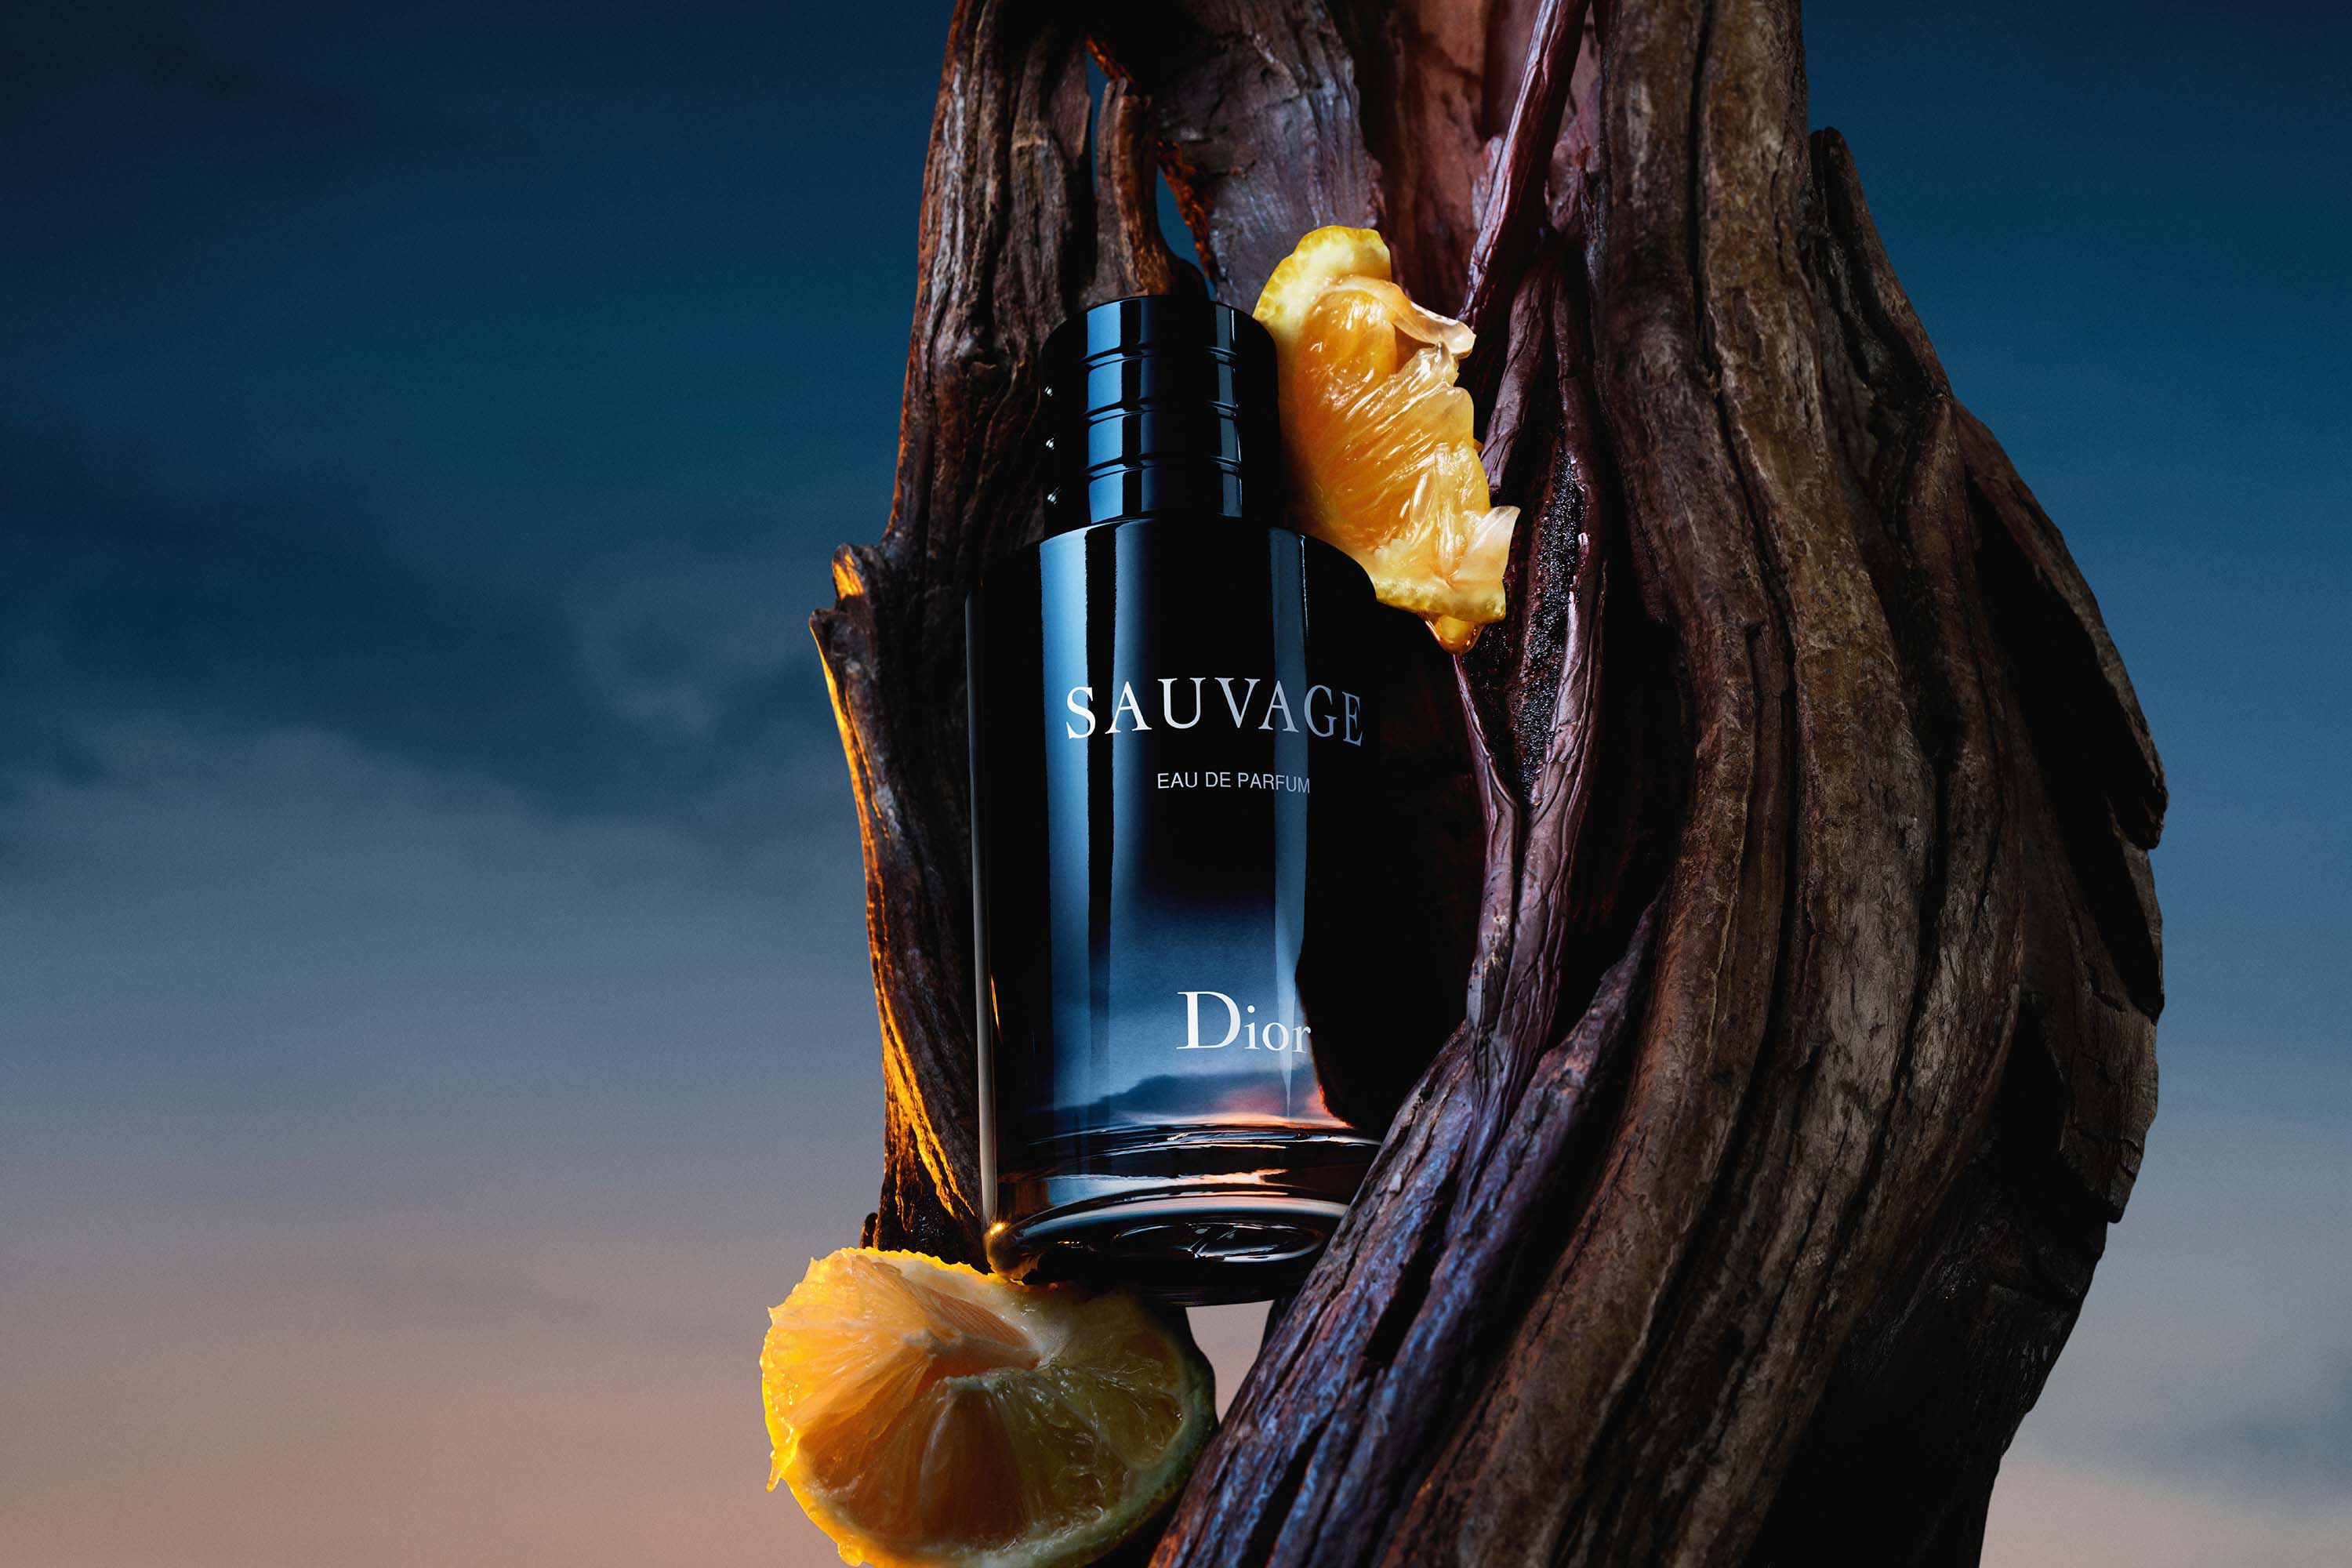 Dior Sauvage EDP Spray Perfume for Men by Dior